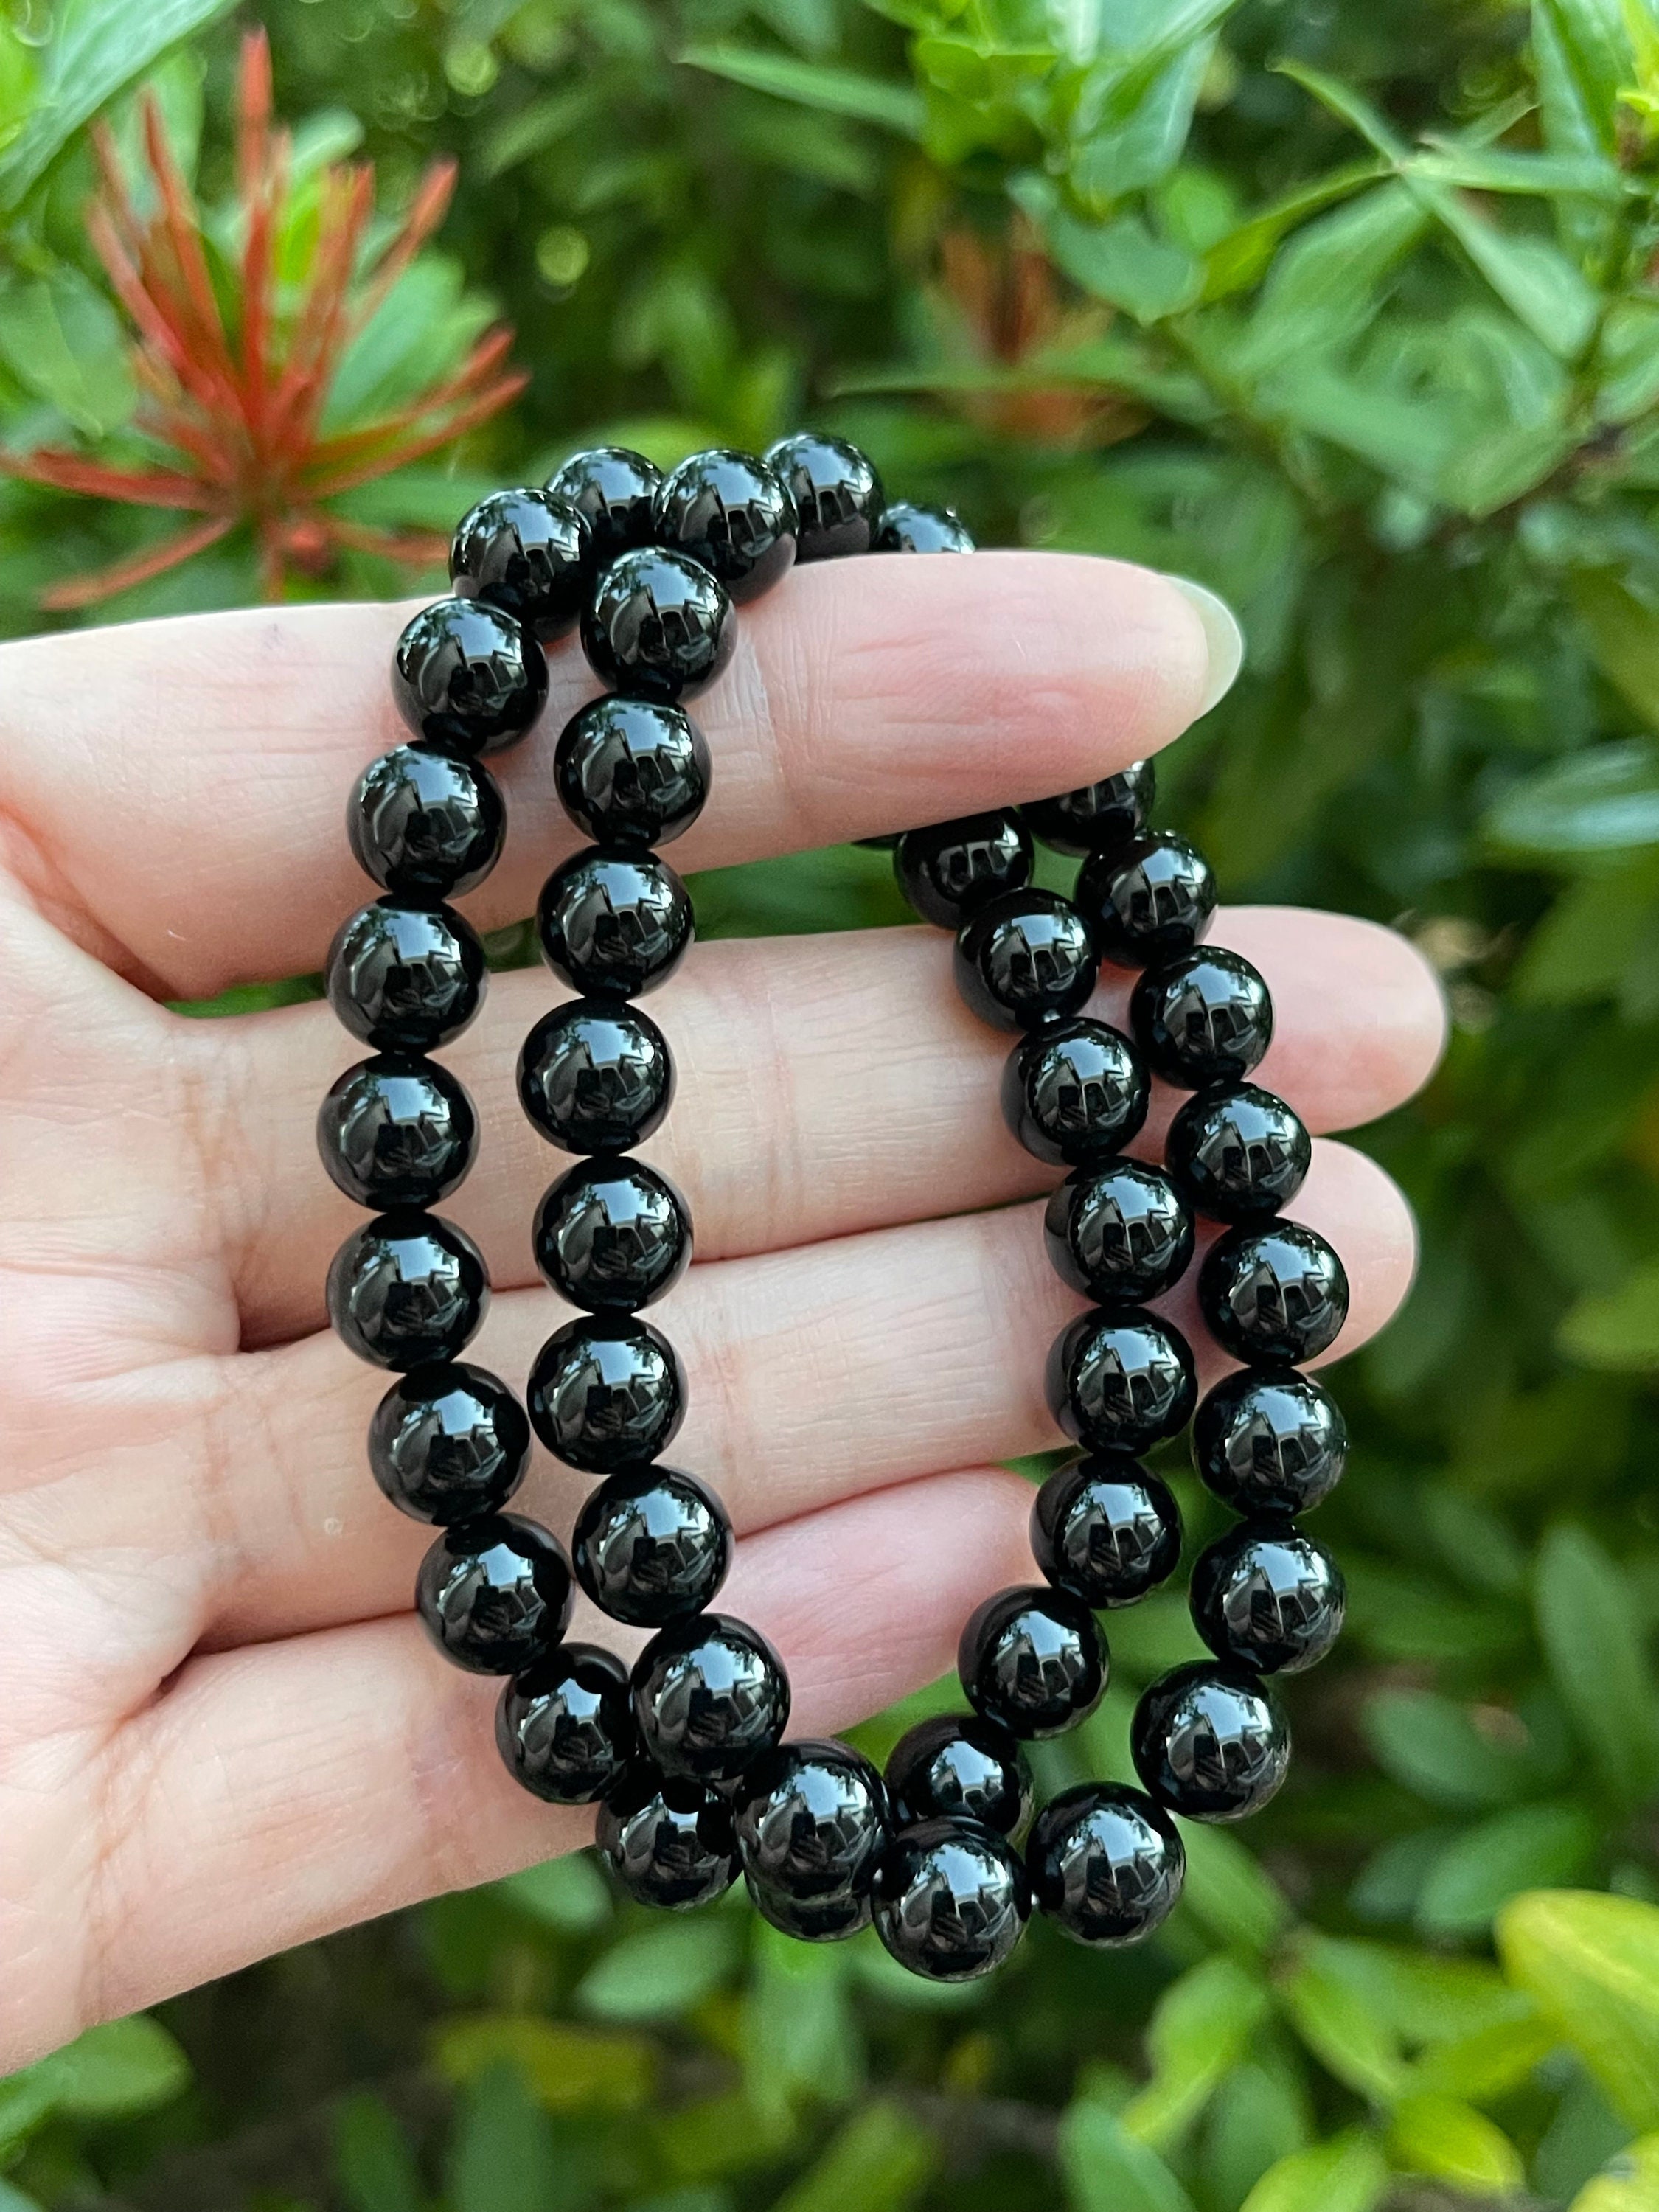 Black Onyx Healing Gemstone Bracelet – The Healing Charm